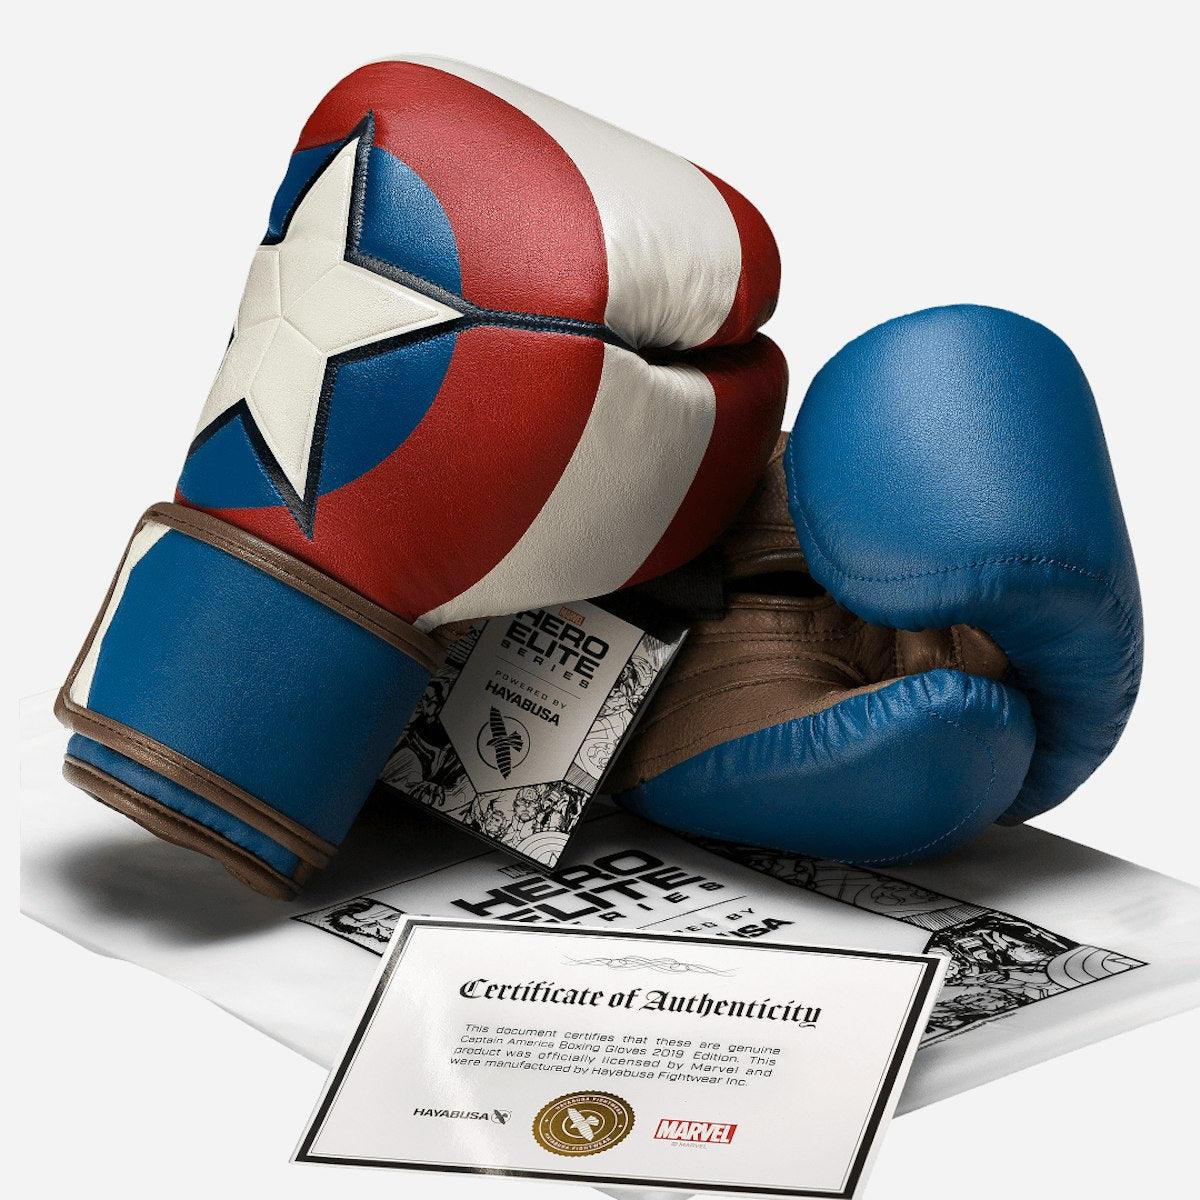 Marvel's Captain America Boxing Gloves - Violent Art Shop